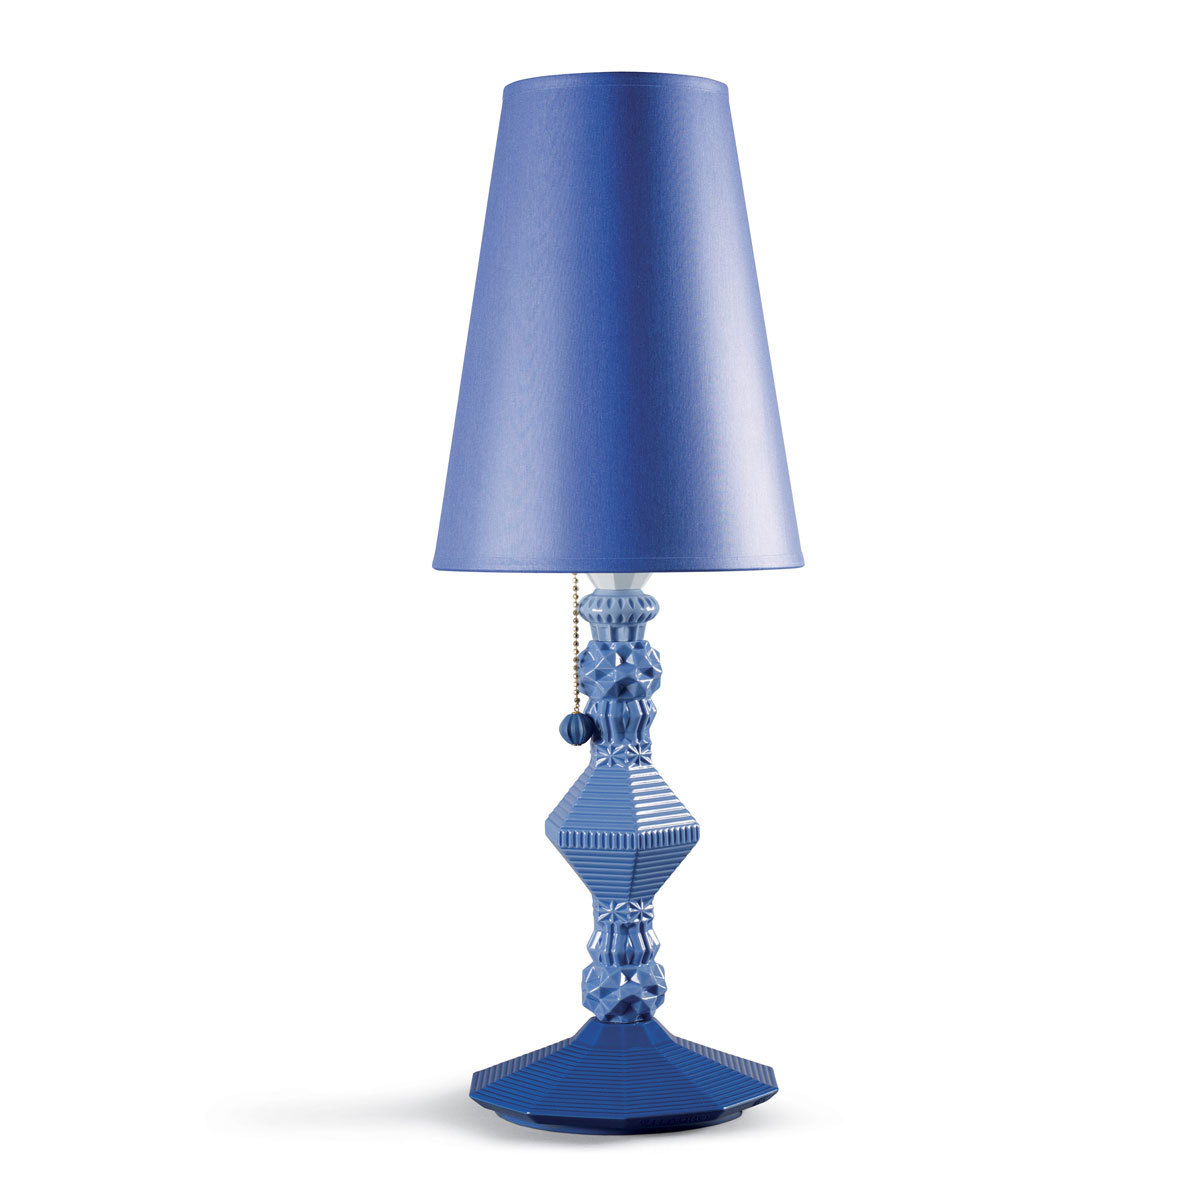 Lladro Classic Lighting, Belle De Nuit Table Lamp. Blue